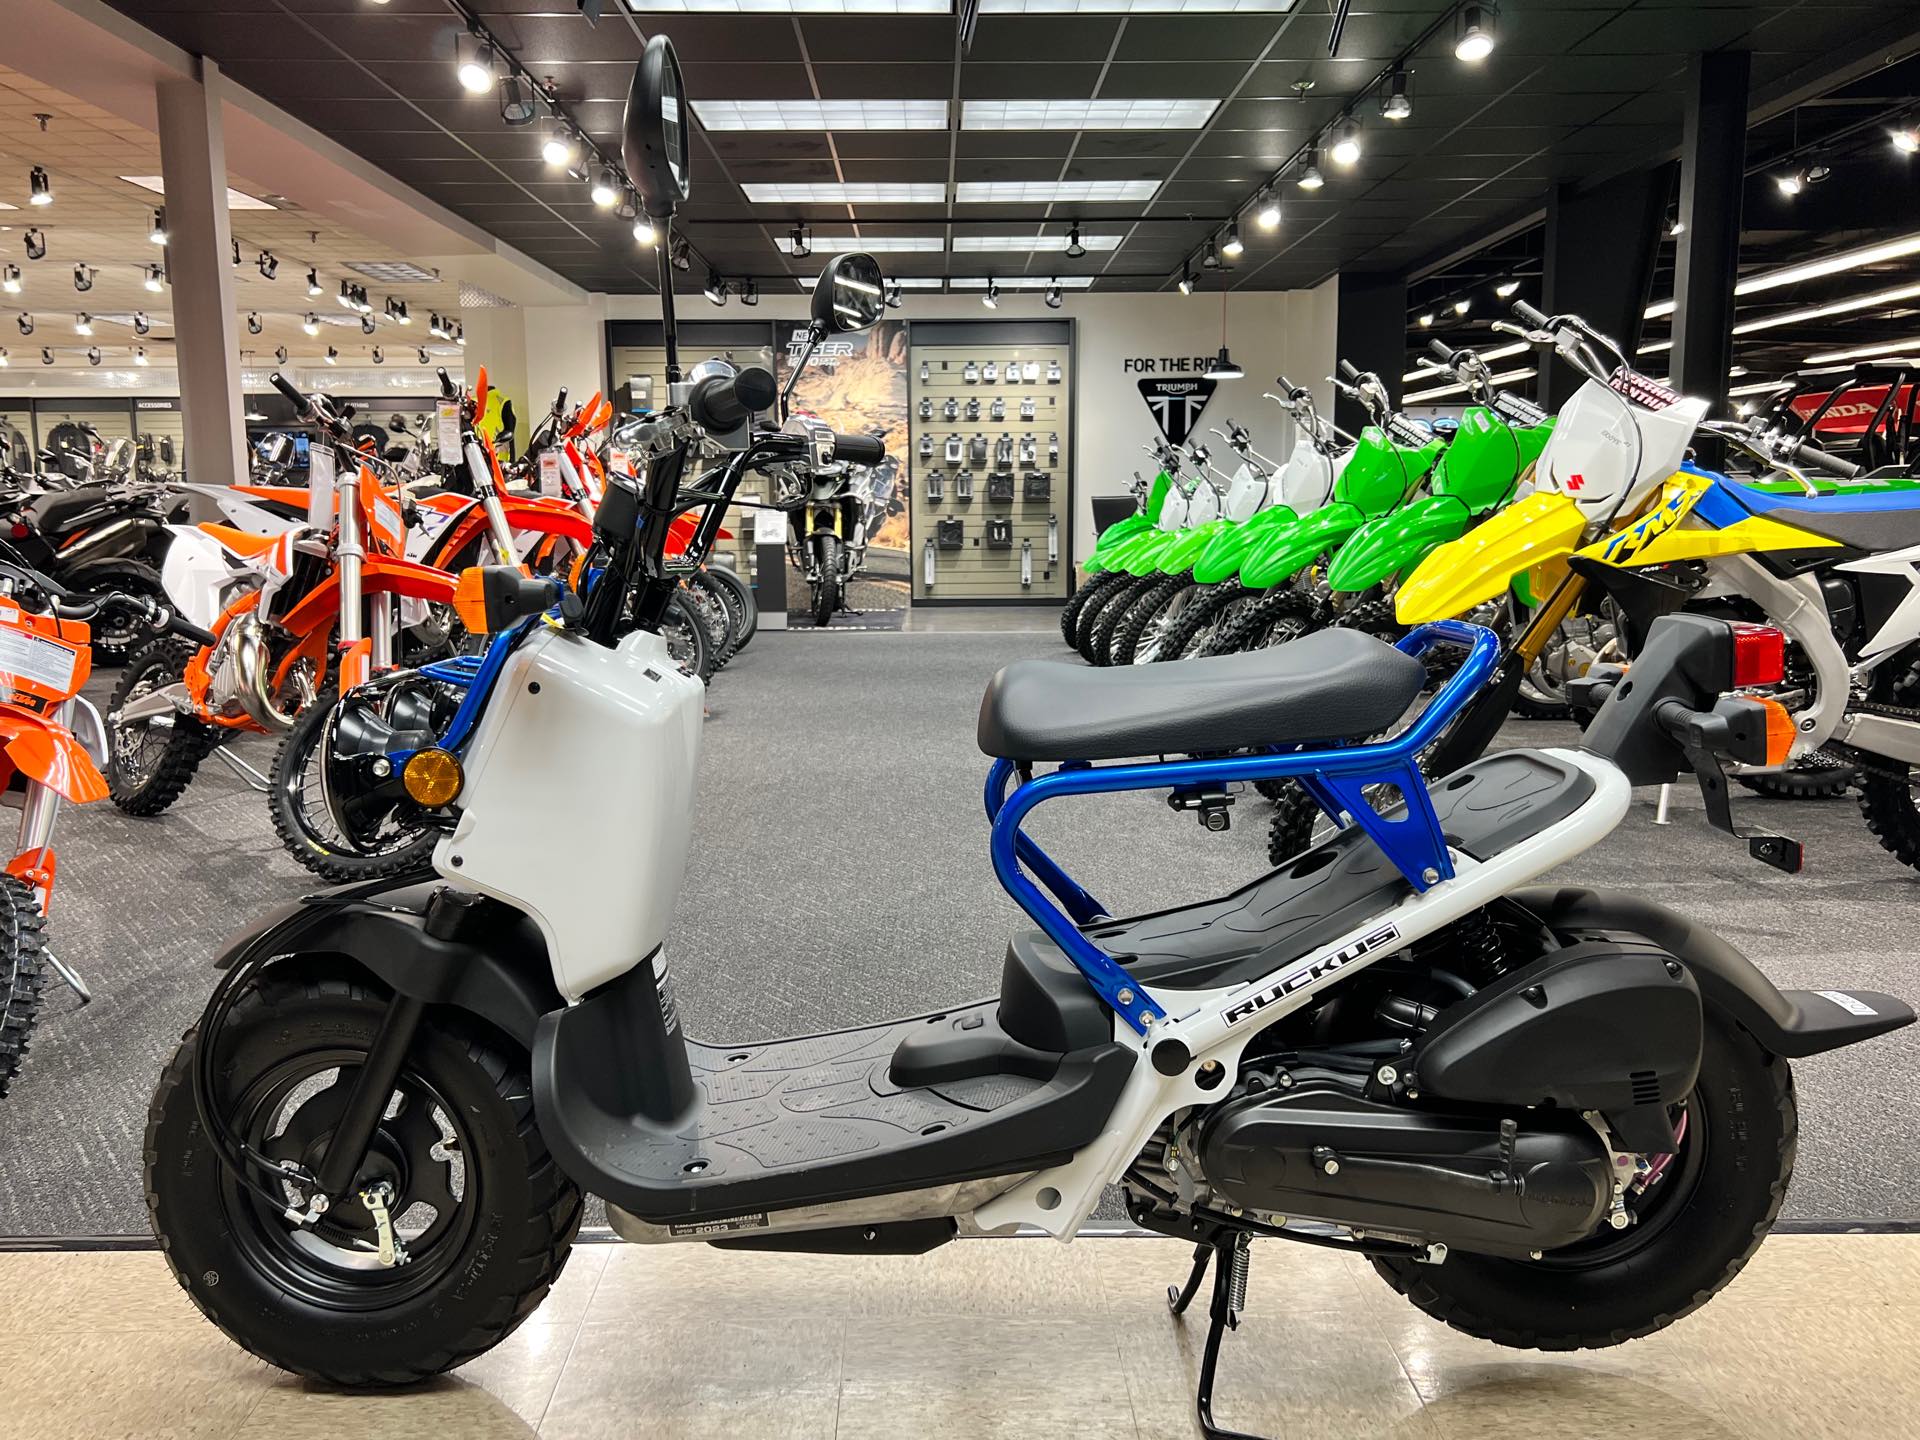 2023 Honda Ruckus Base at Sloans Motorcycle ATV, Murfreesboro, TN, 37129